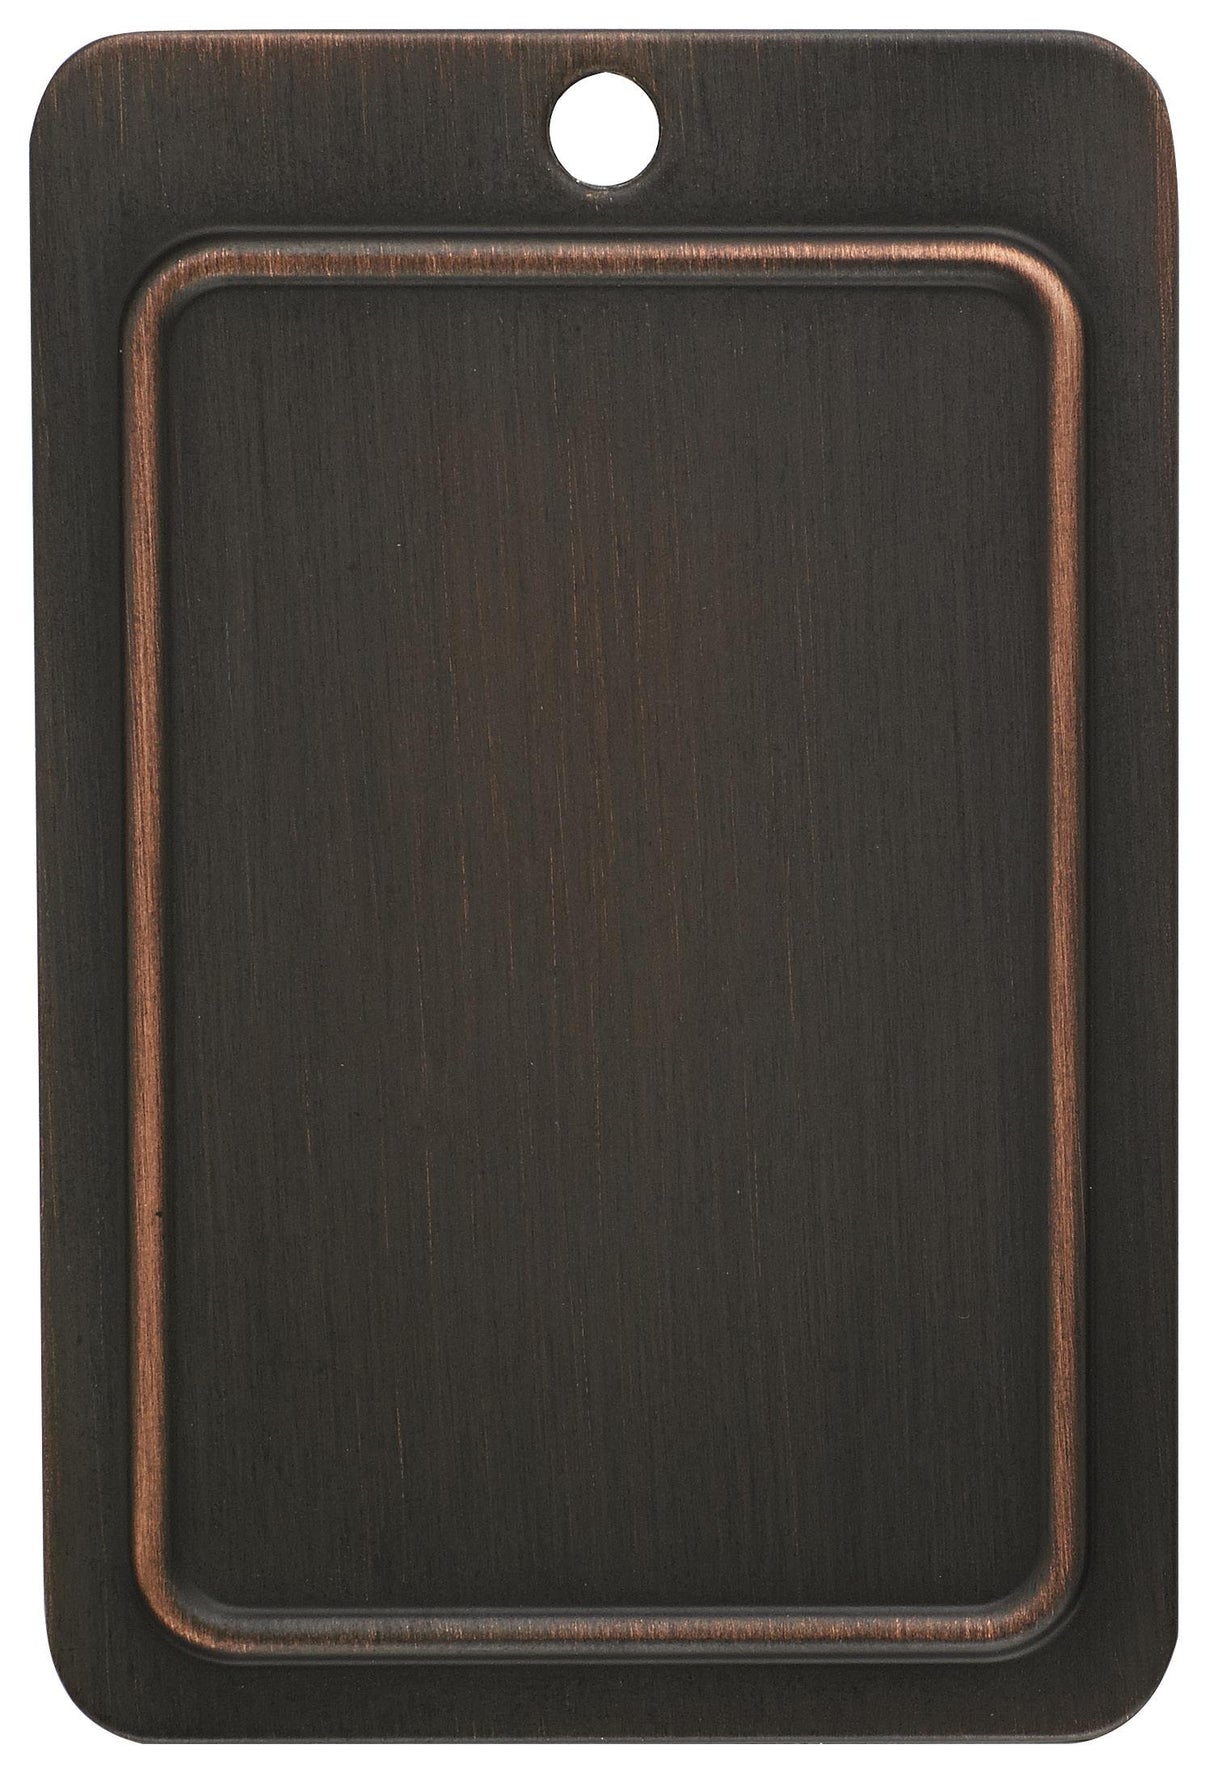 Amerock Cabinet Backplate Oil Rubbed Bronze 3 inch (76 mm) Center to Center Backplates 1 Pack Cabinet Pull Backplate Drawer Handle Cabinet Hardware